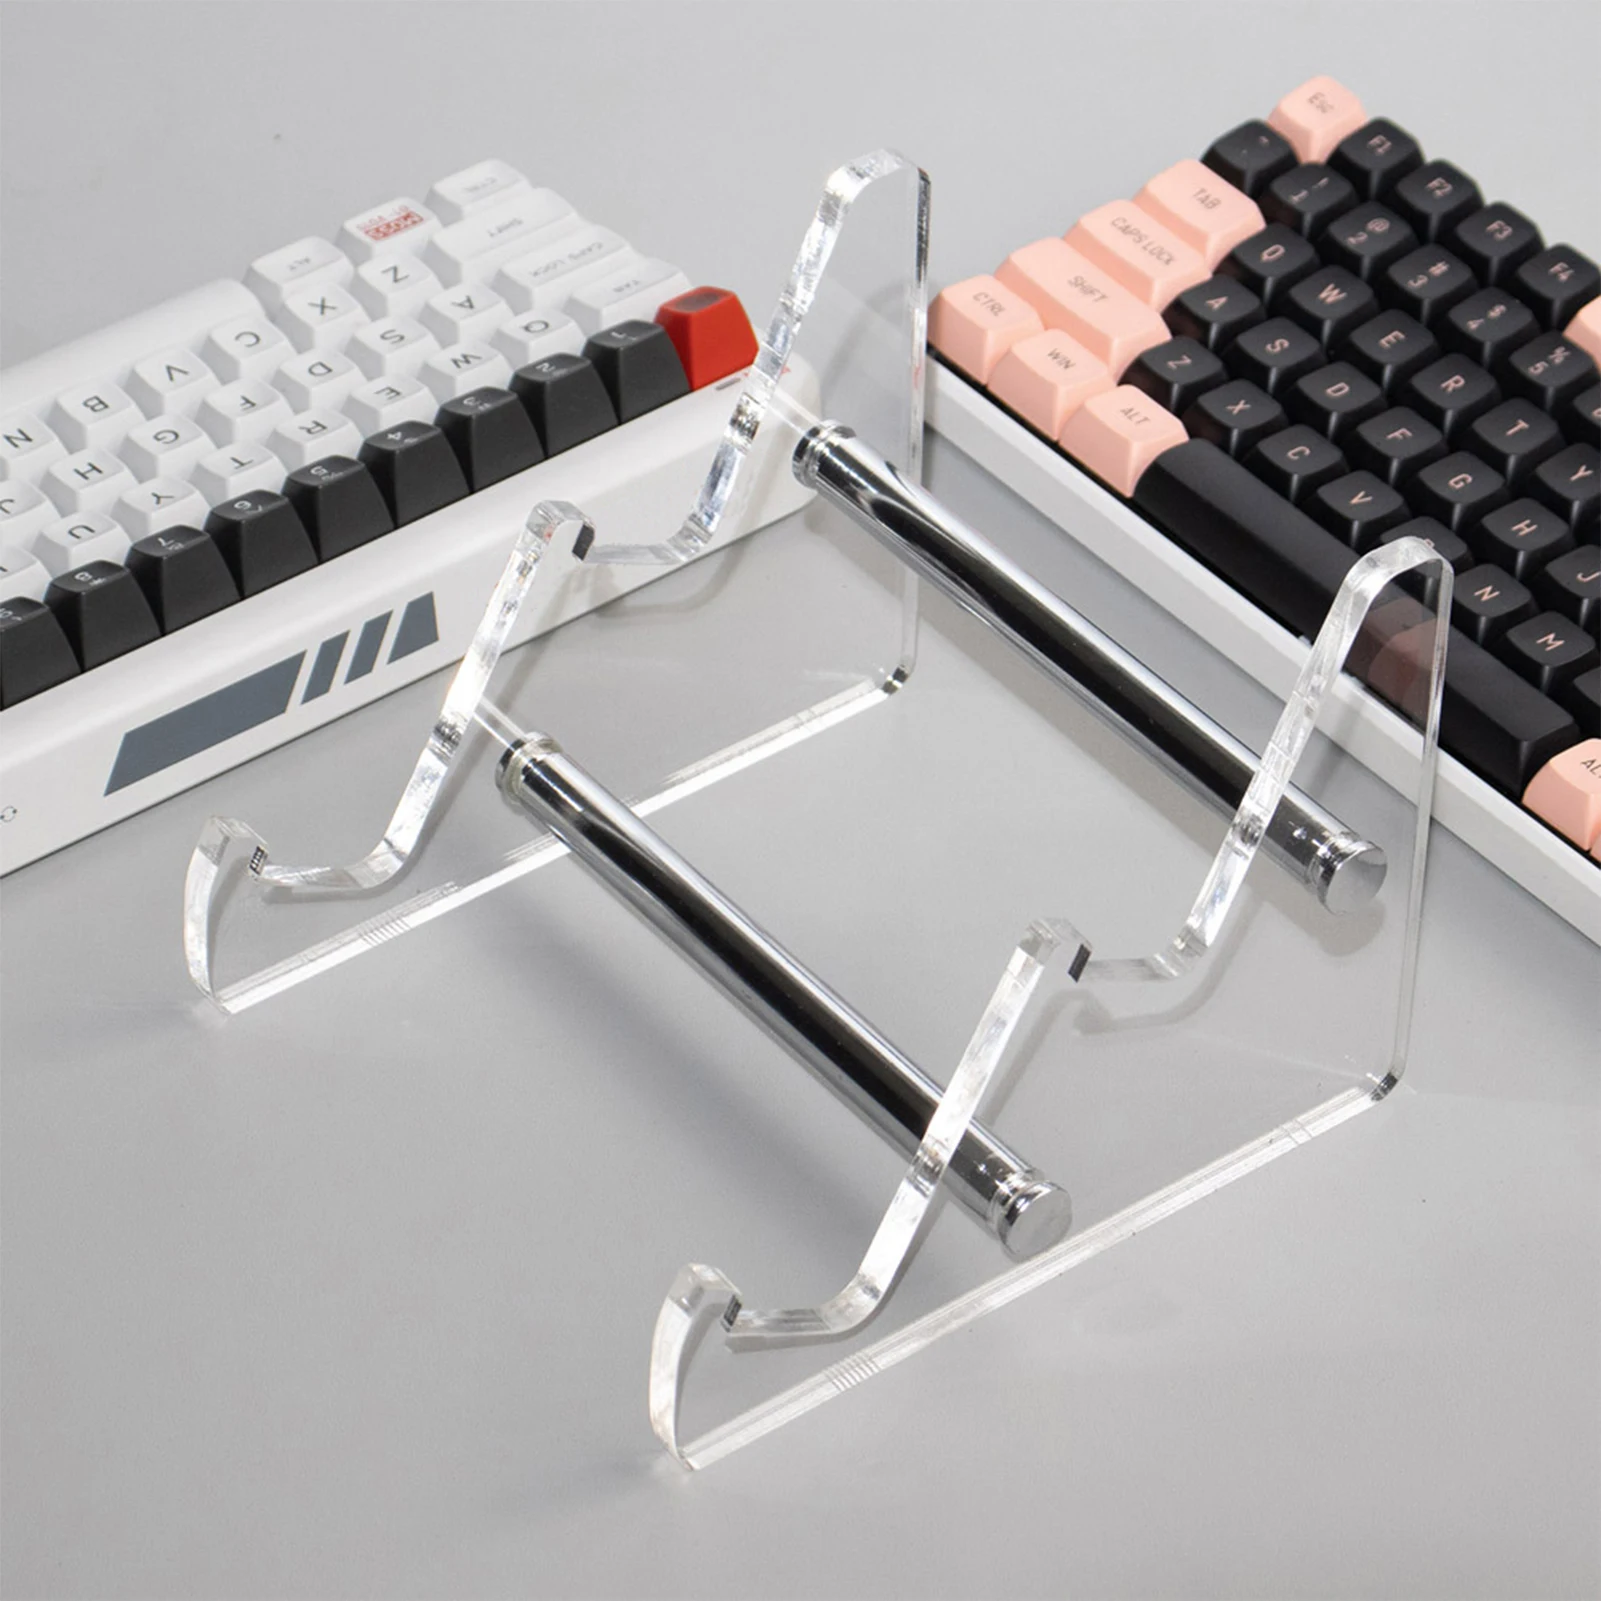 3 Tiers Display Keyboard Holder Transparent Acrylic Keyboard